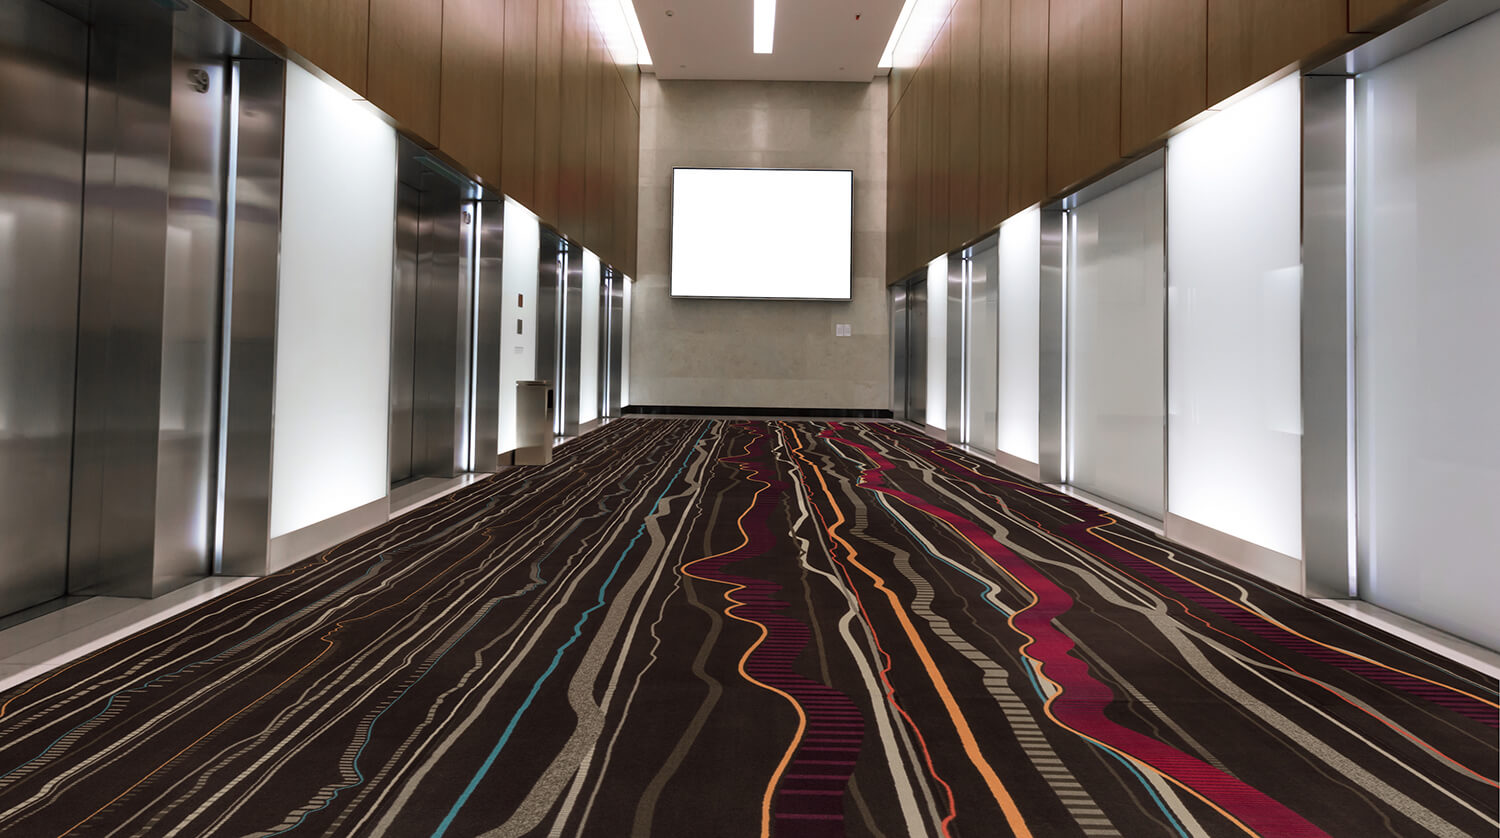 new-hospitality-modular-carpet-collection-tetex-with-milliken-carpet.jpg